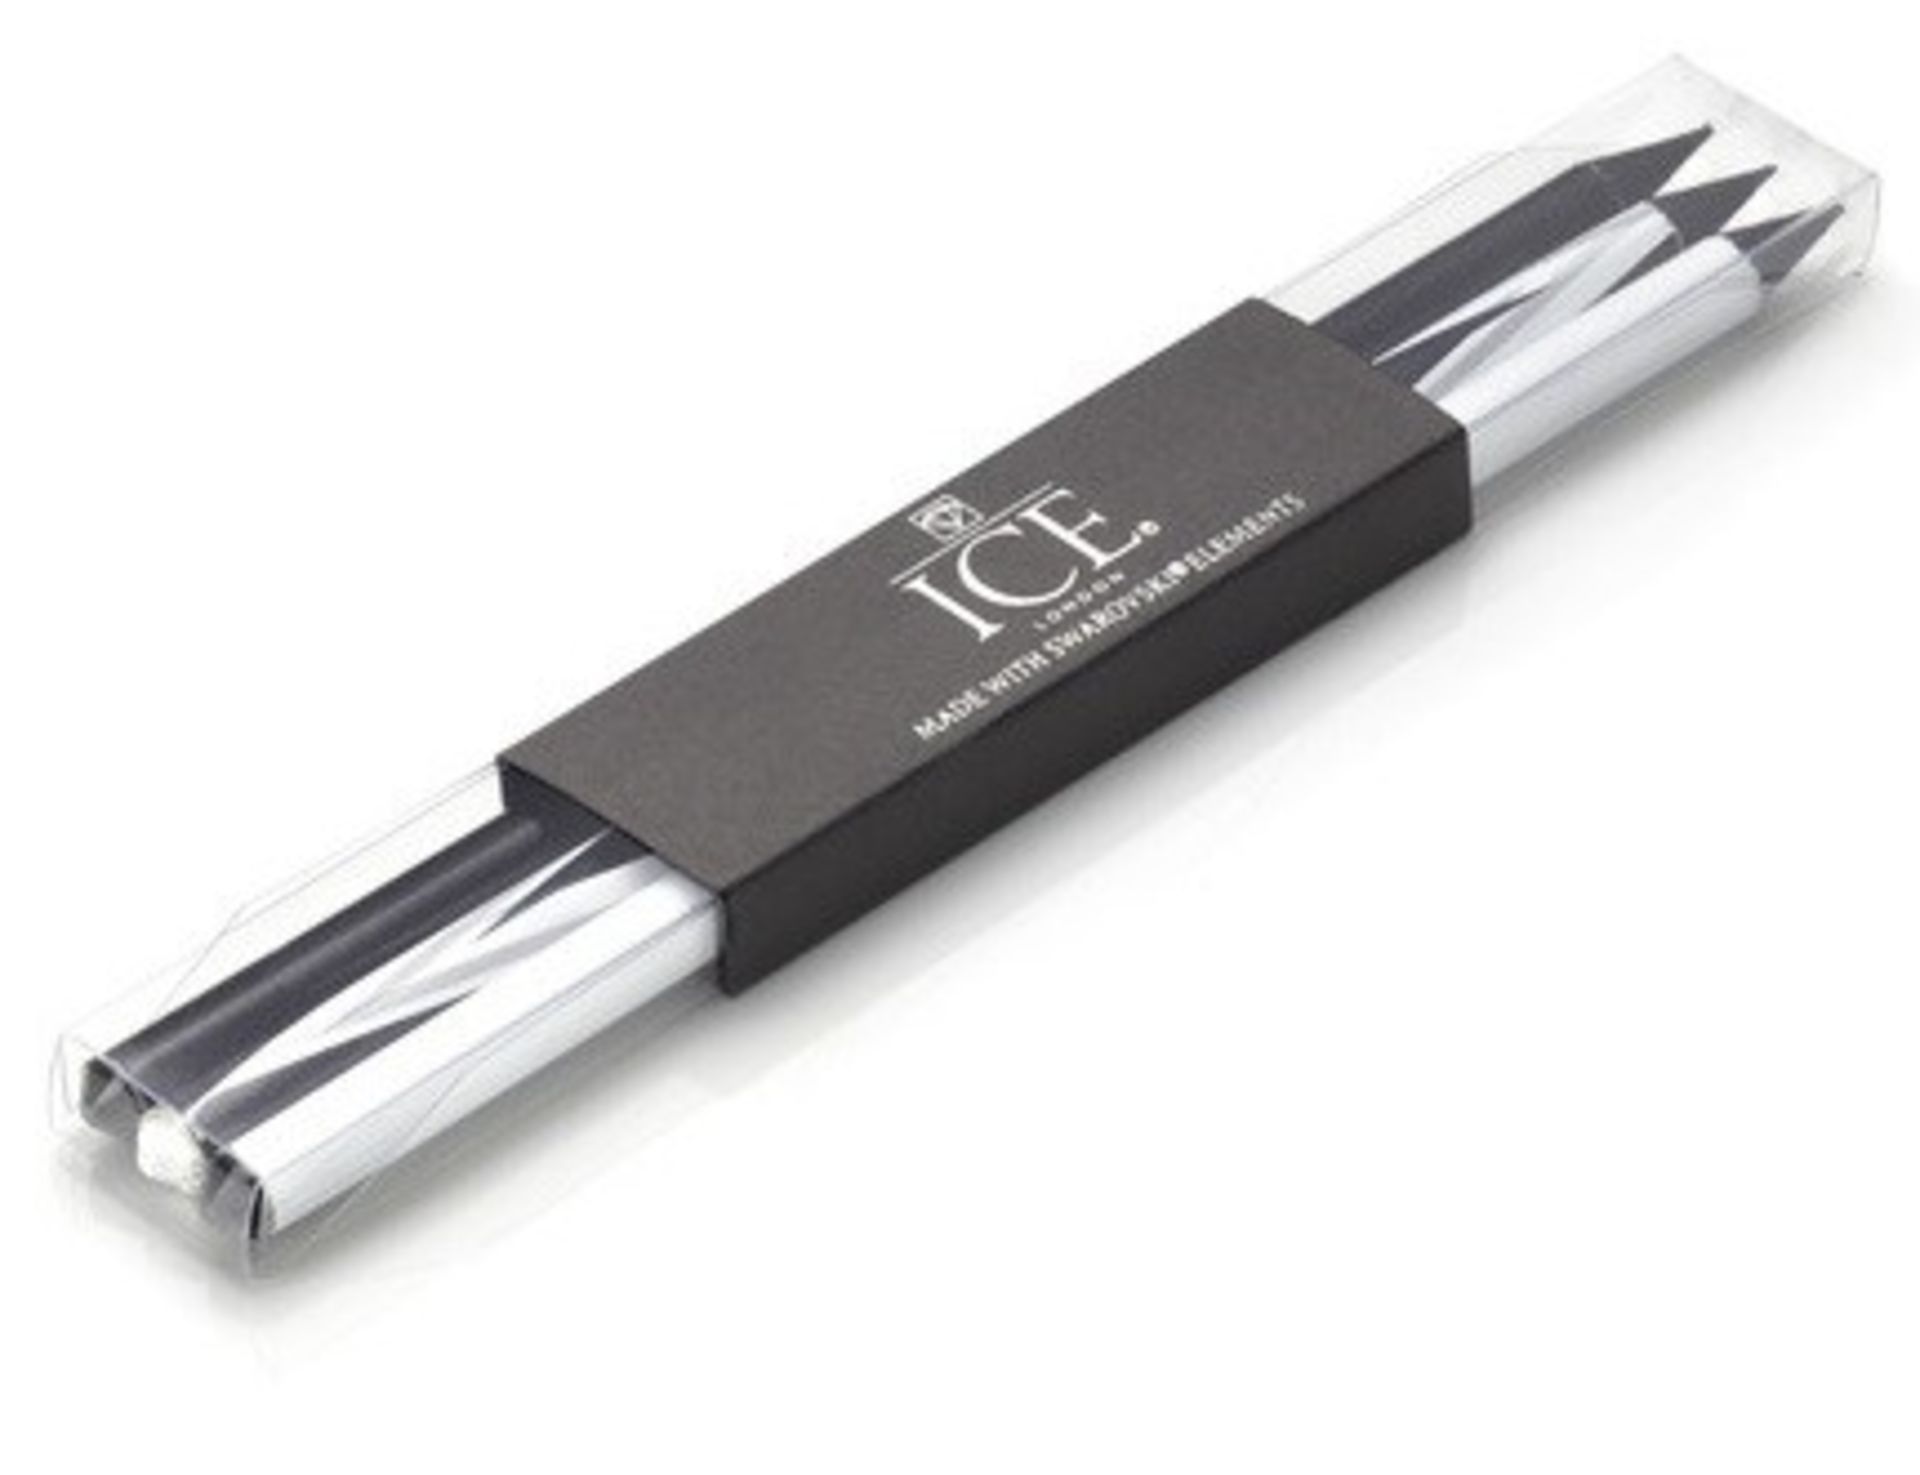 50 x ICE London Union Jack Pencils (Set Of 3) - Black - Made With Swarovski Elements - Brand New & - Image 2 of 2